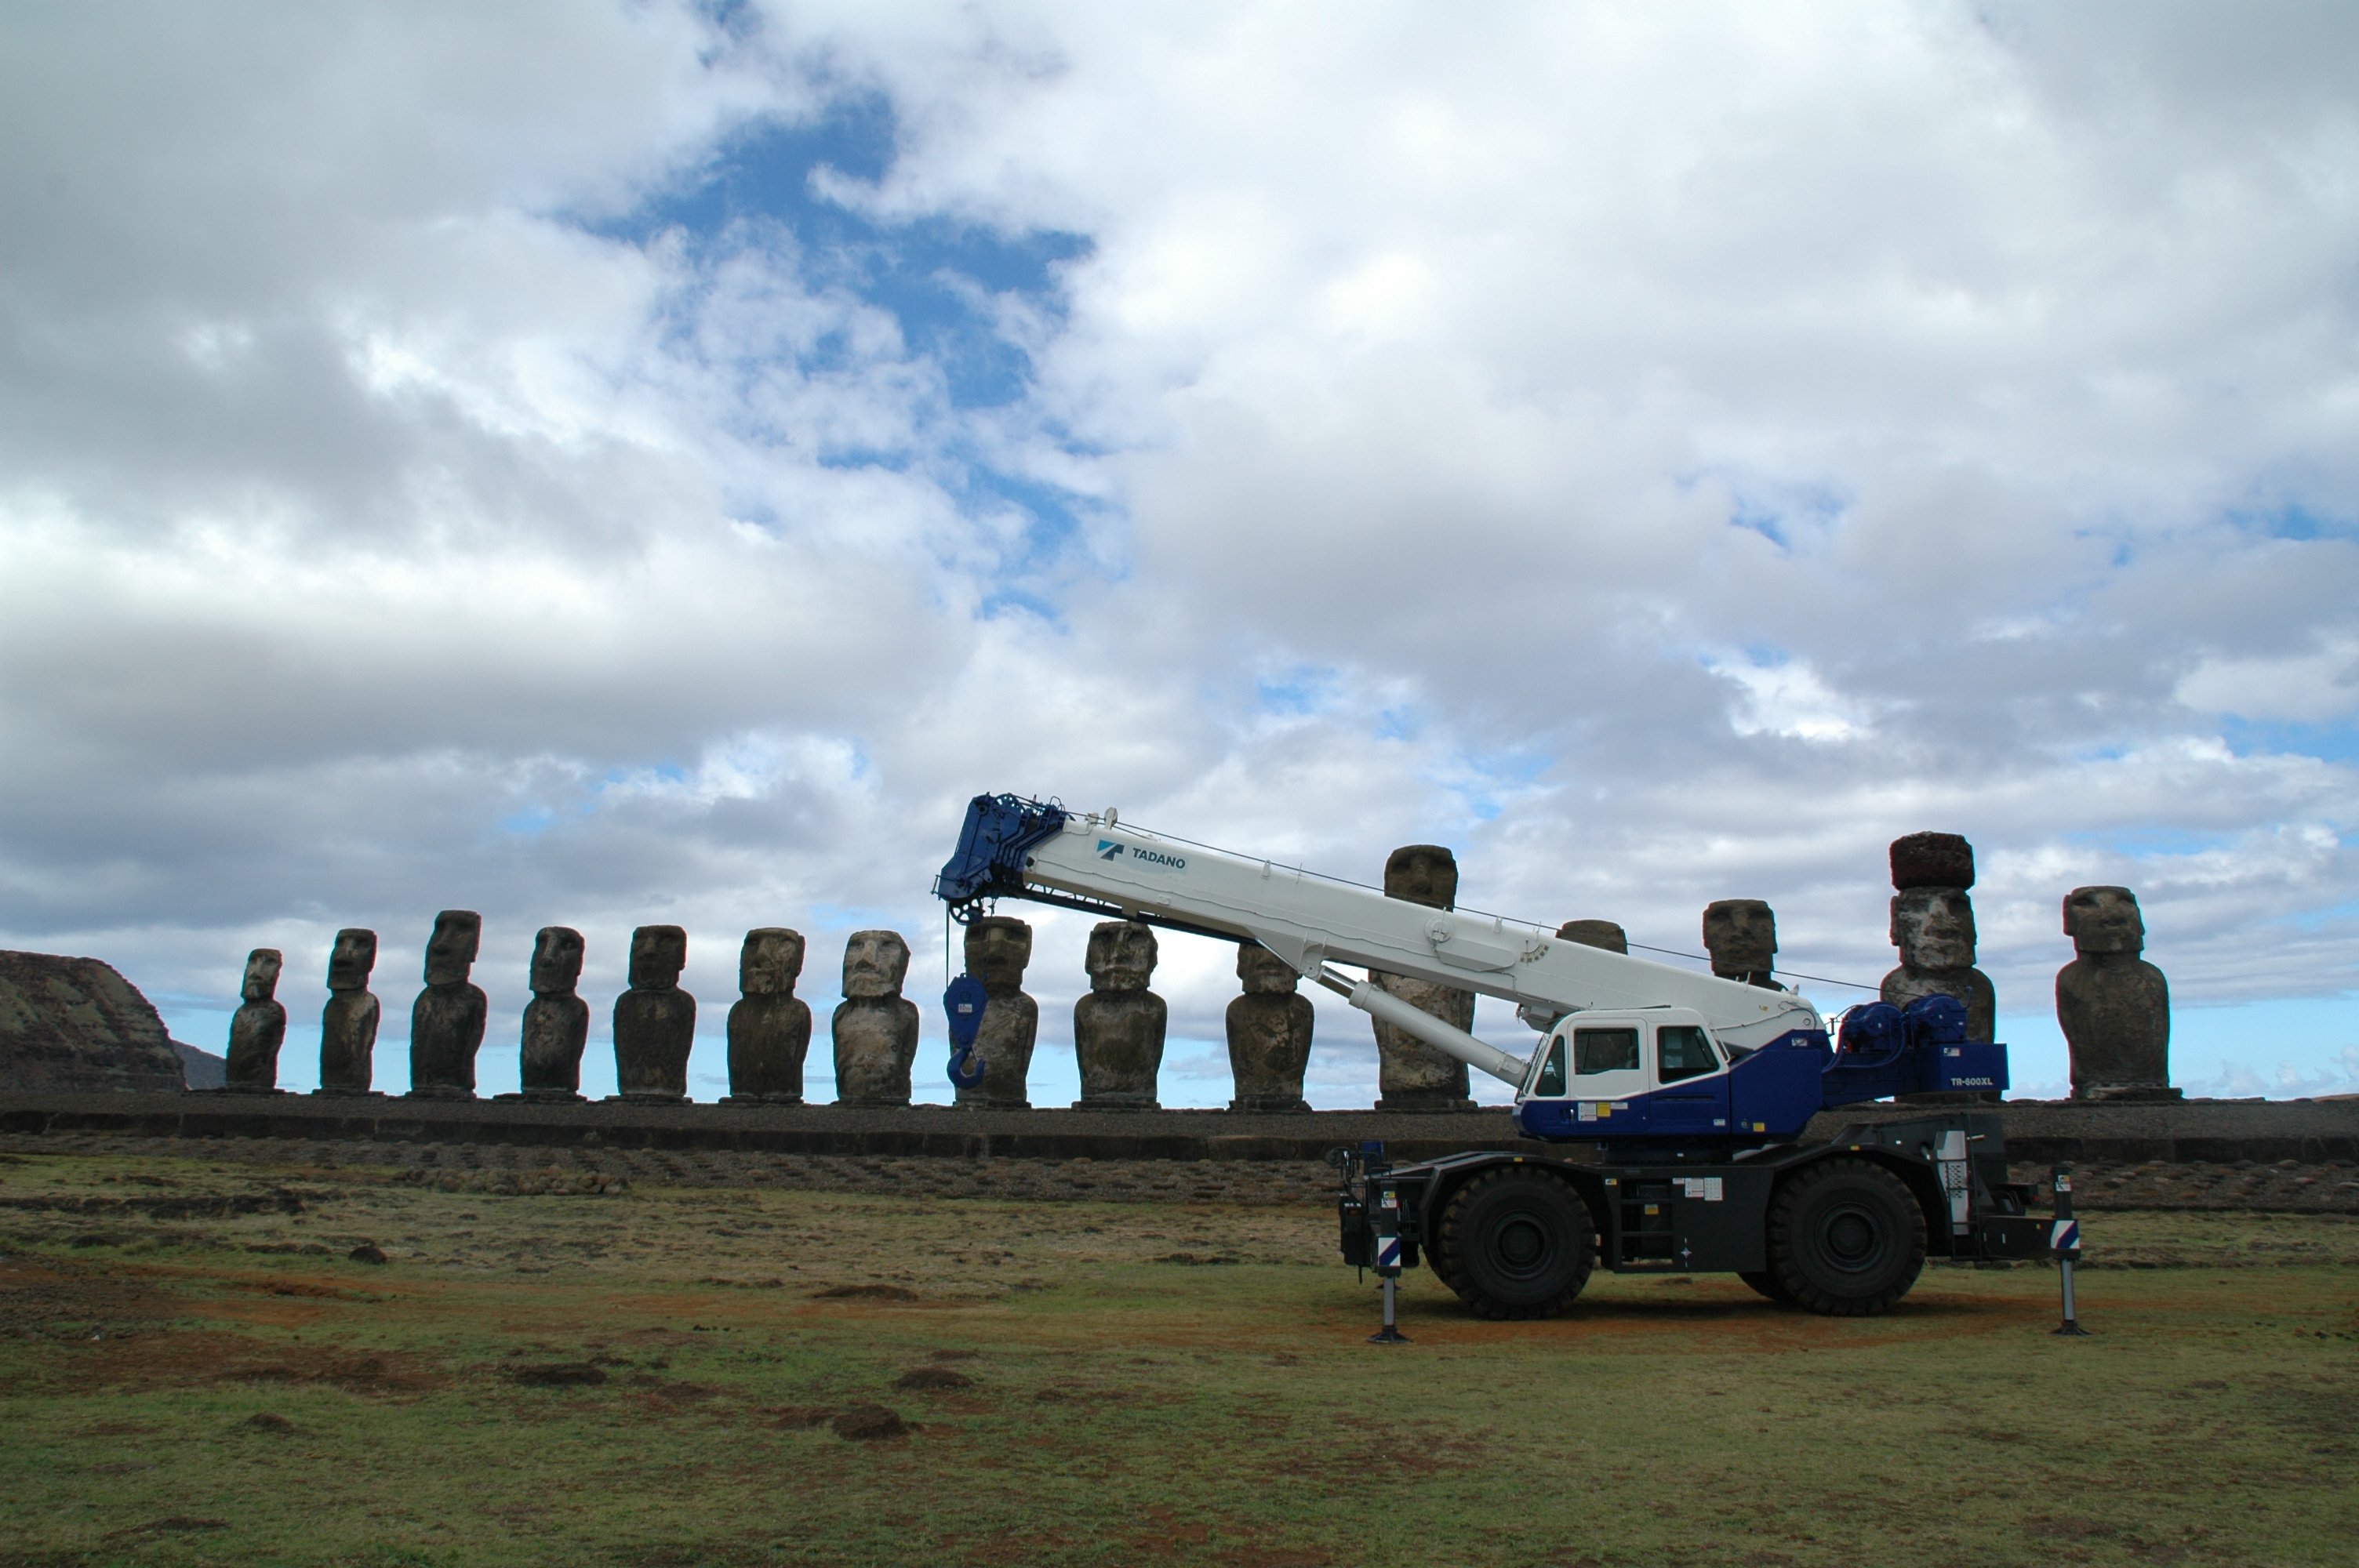 Moai Restoration Project